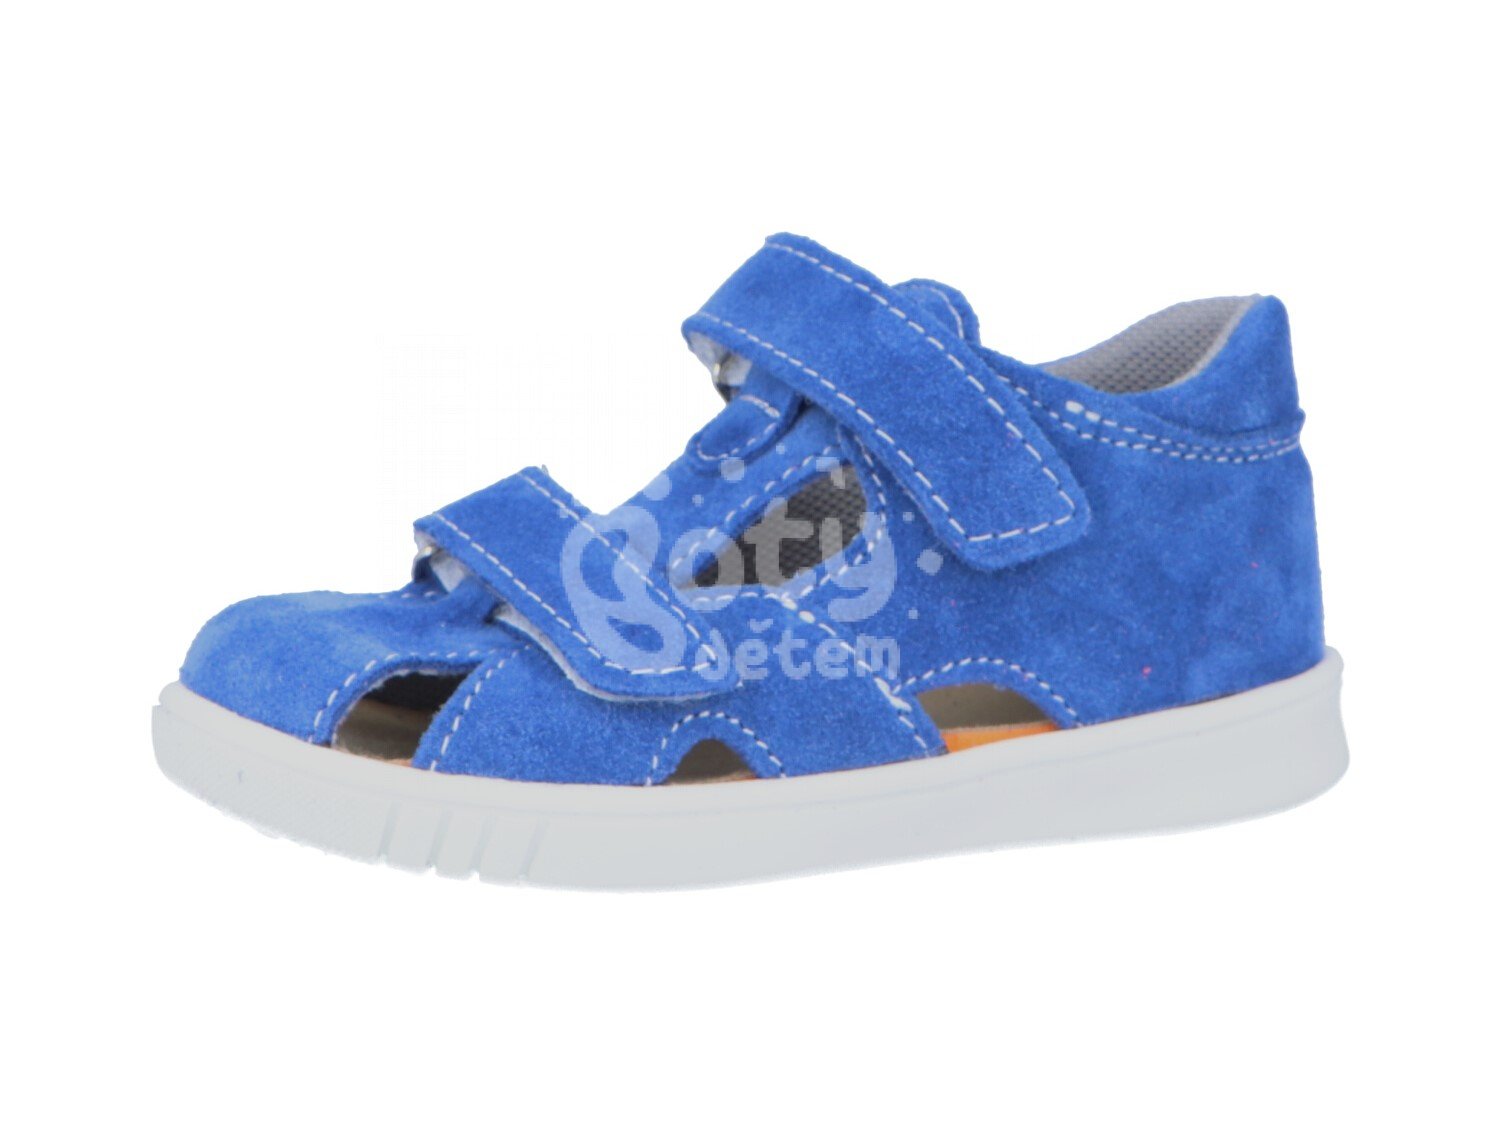 Jonap kožené sandálky 036 S modrá